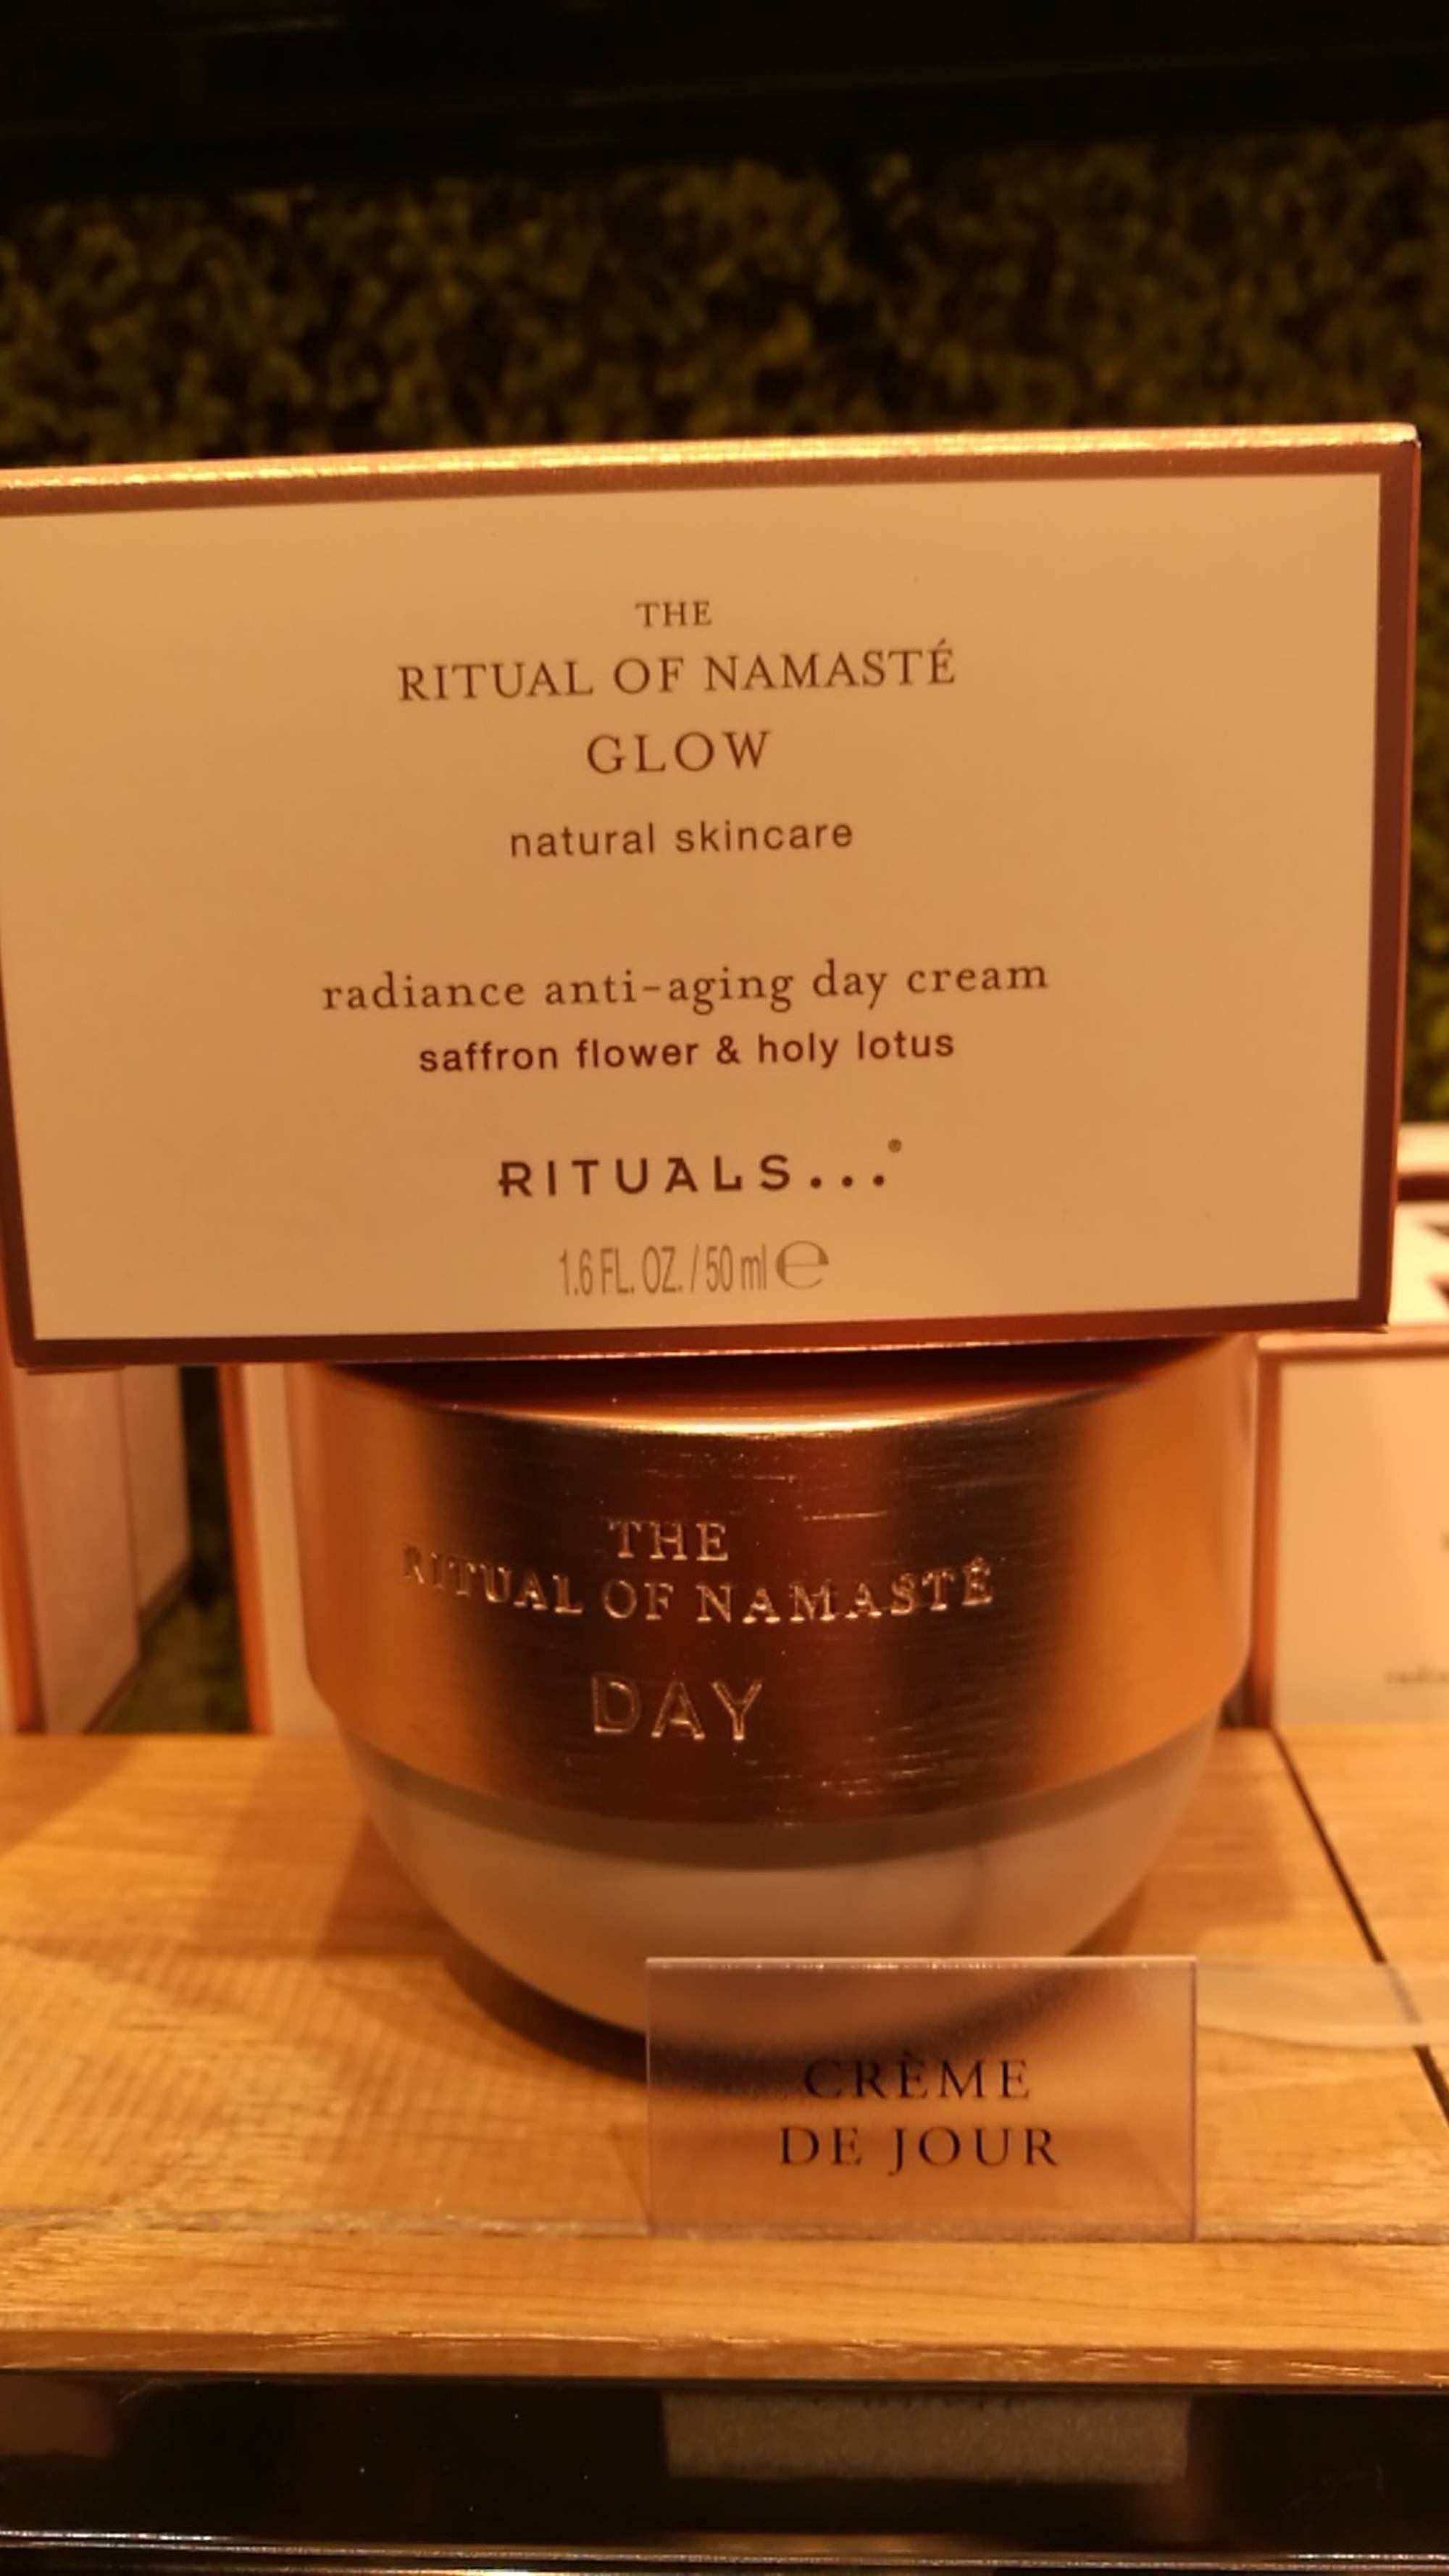 RITUALS - The ritual of namasté - Radiance anti-aging day cream